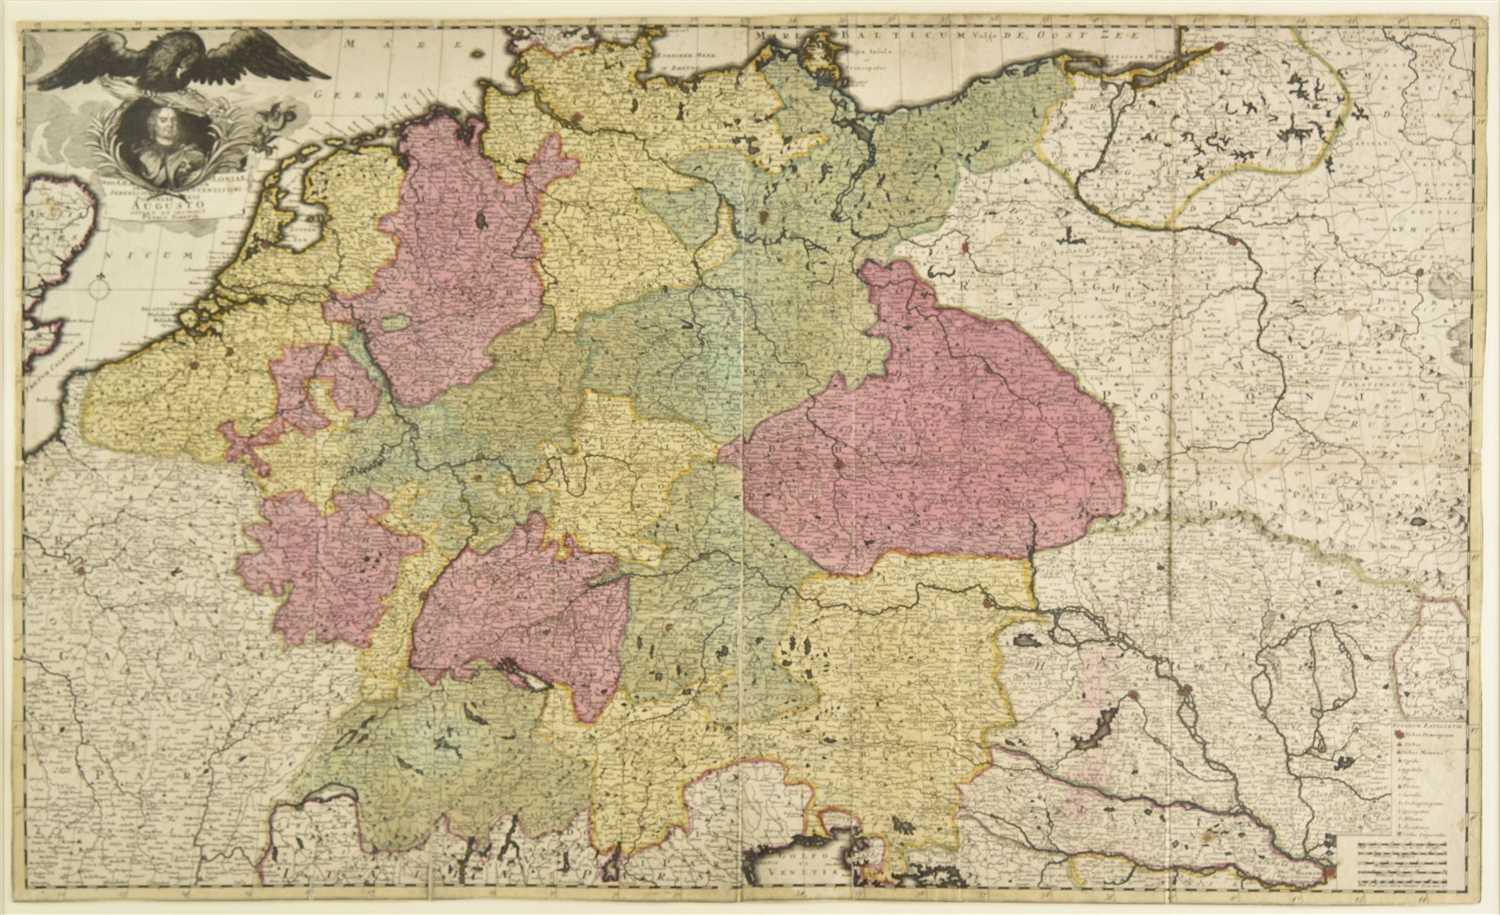 Lot 134 - Poland & Germany. Petrus Schenk, 1697